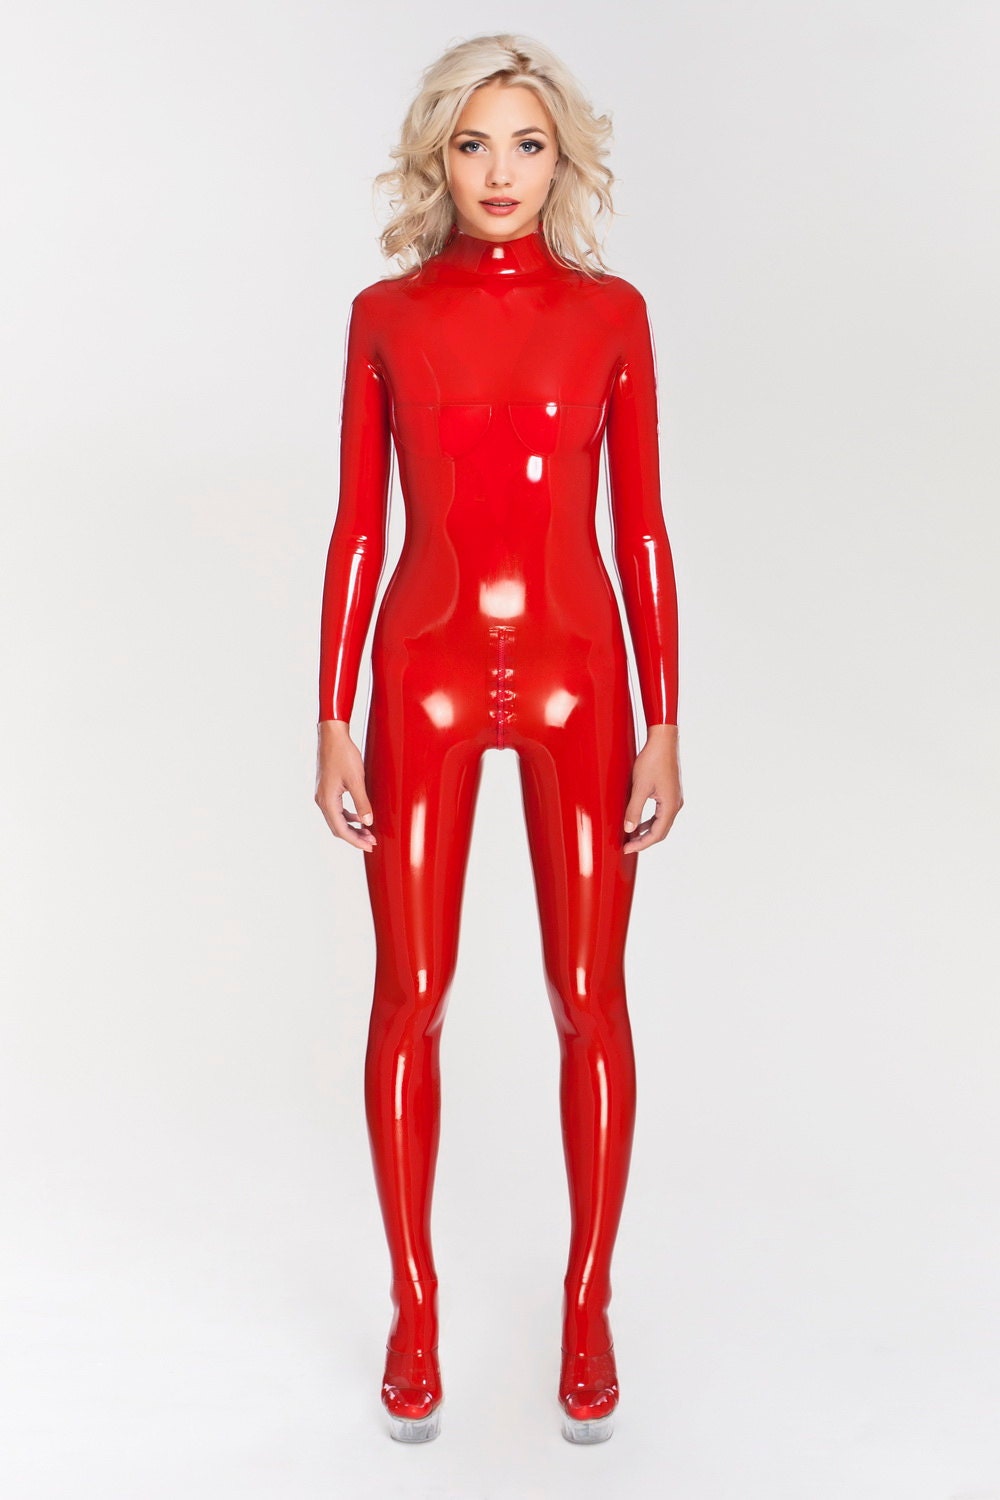 Red Latex Suit 17